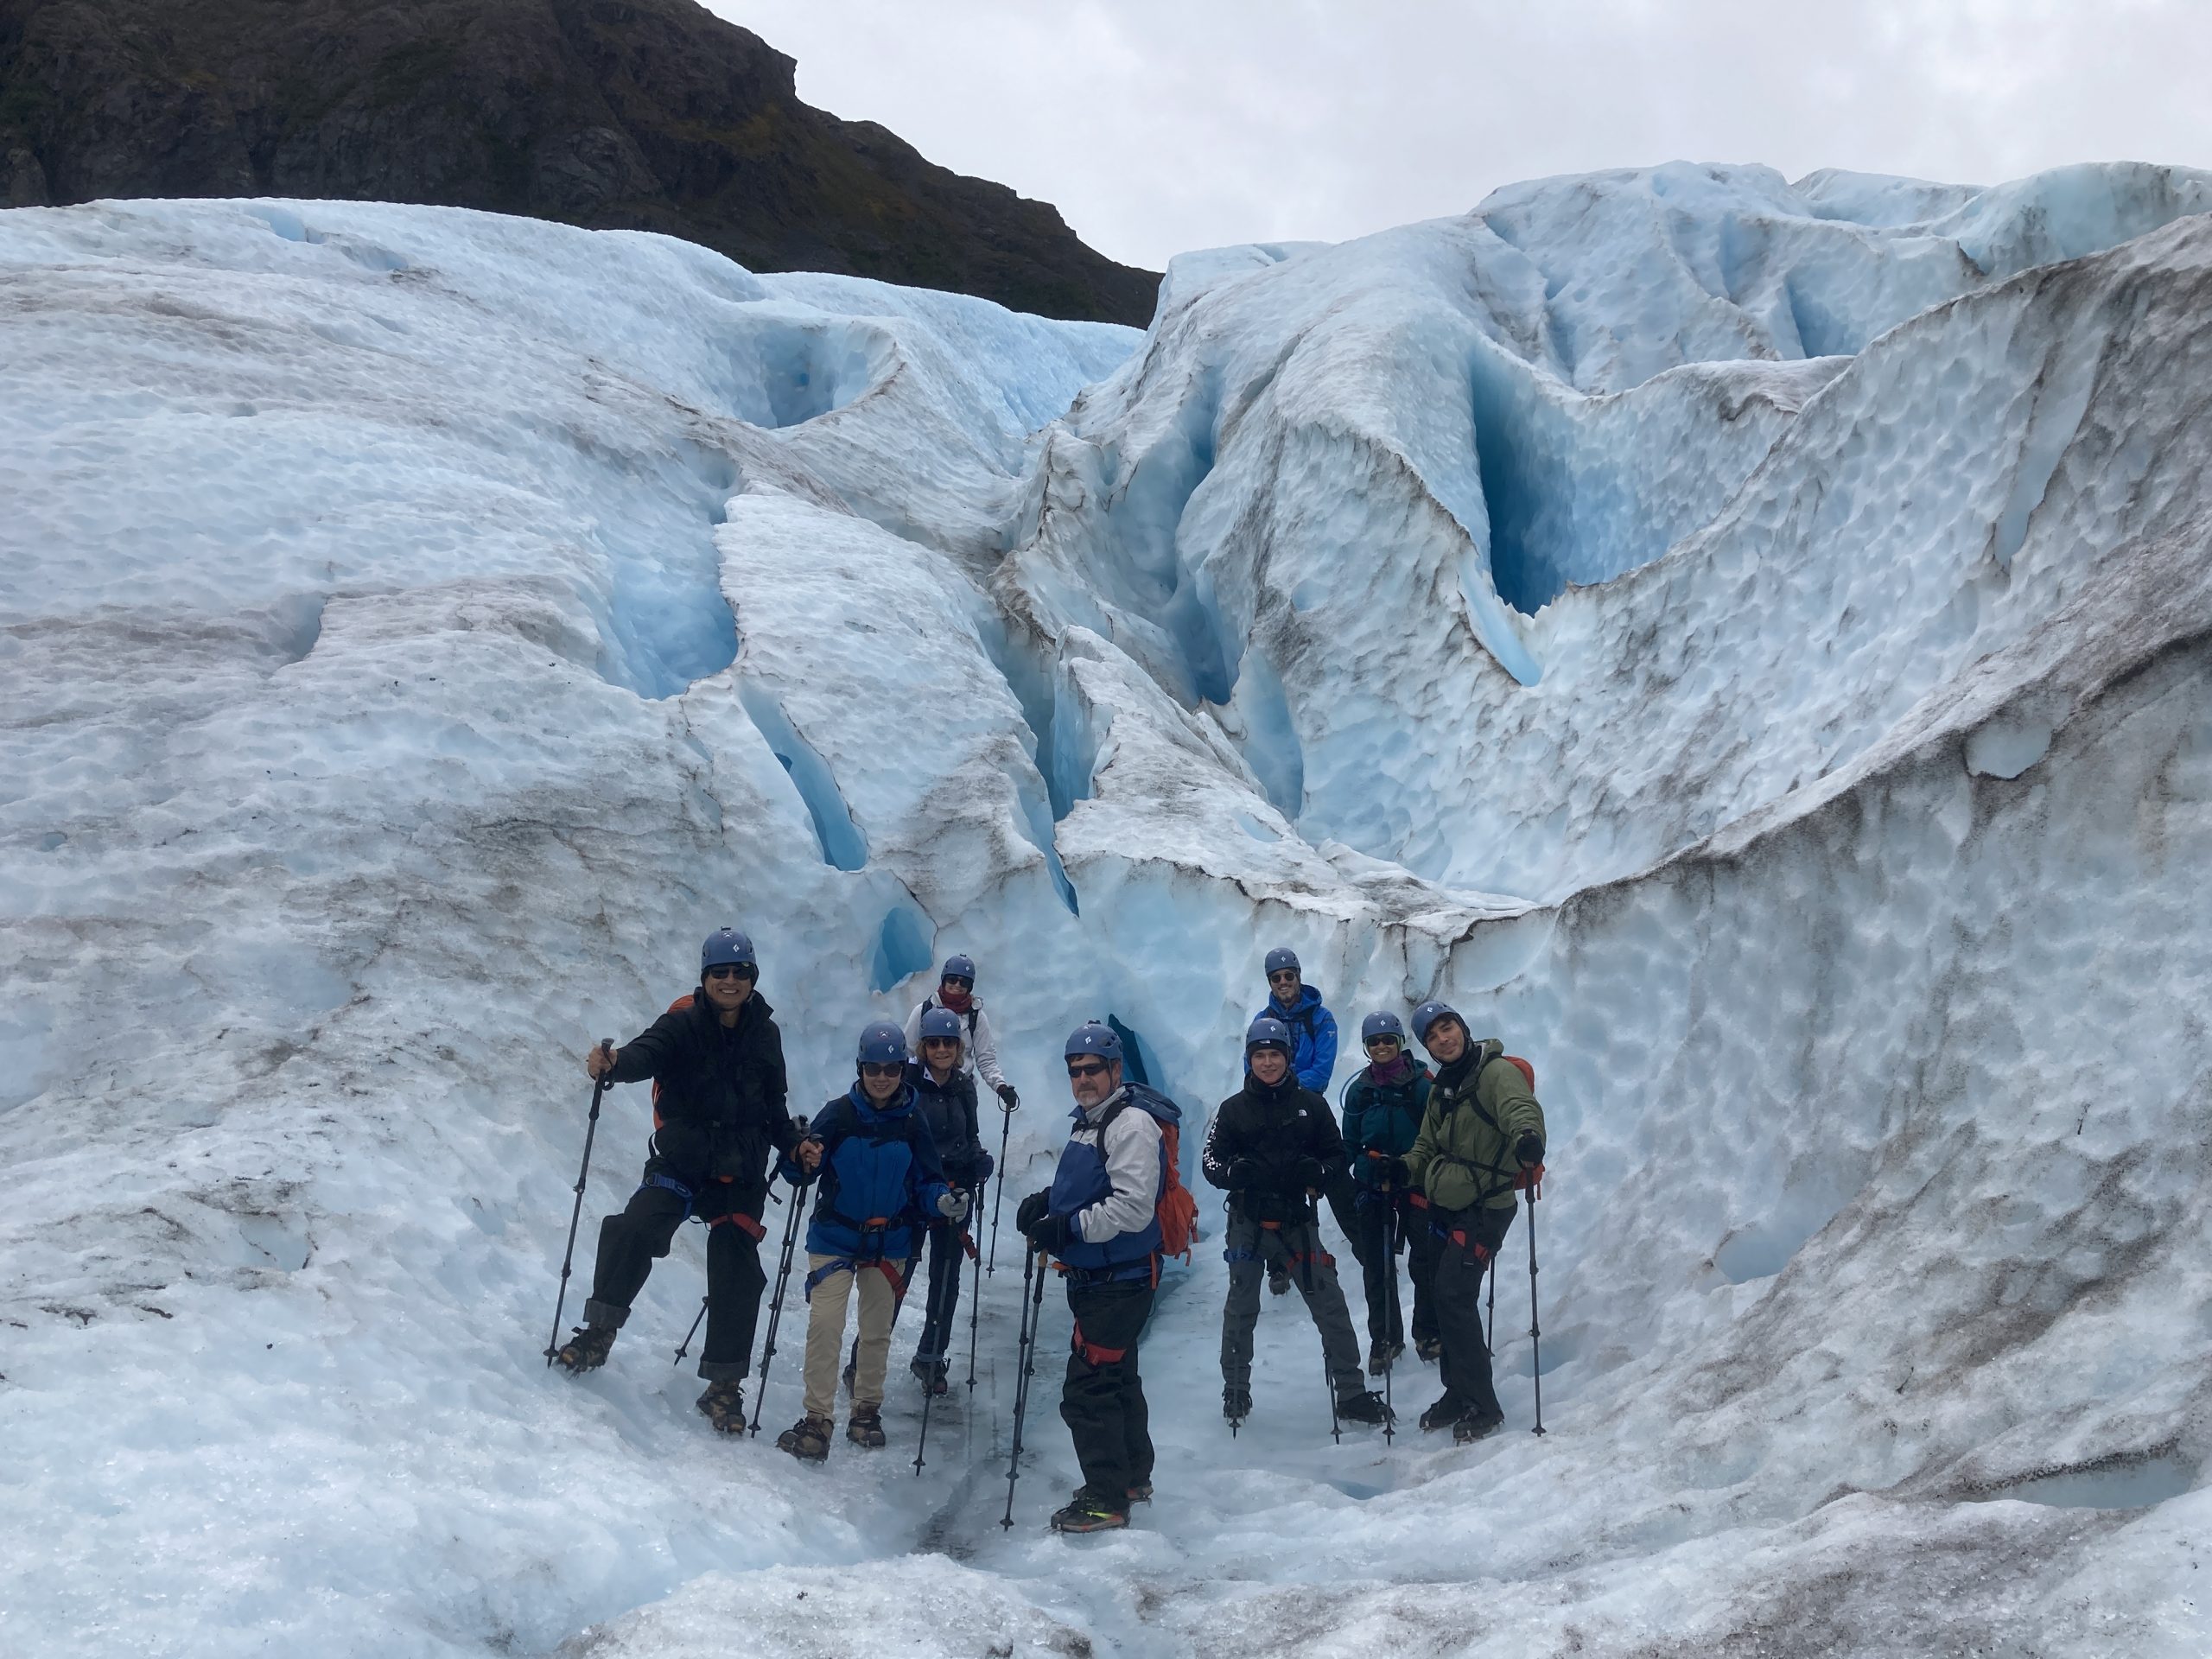 TRIP REPORT: 9/9/22 Exit Glacier Ice Hiking Adventure